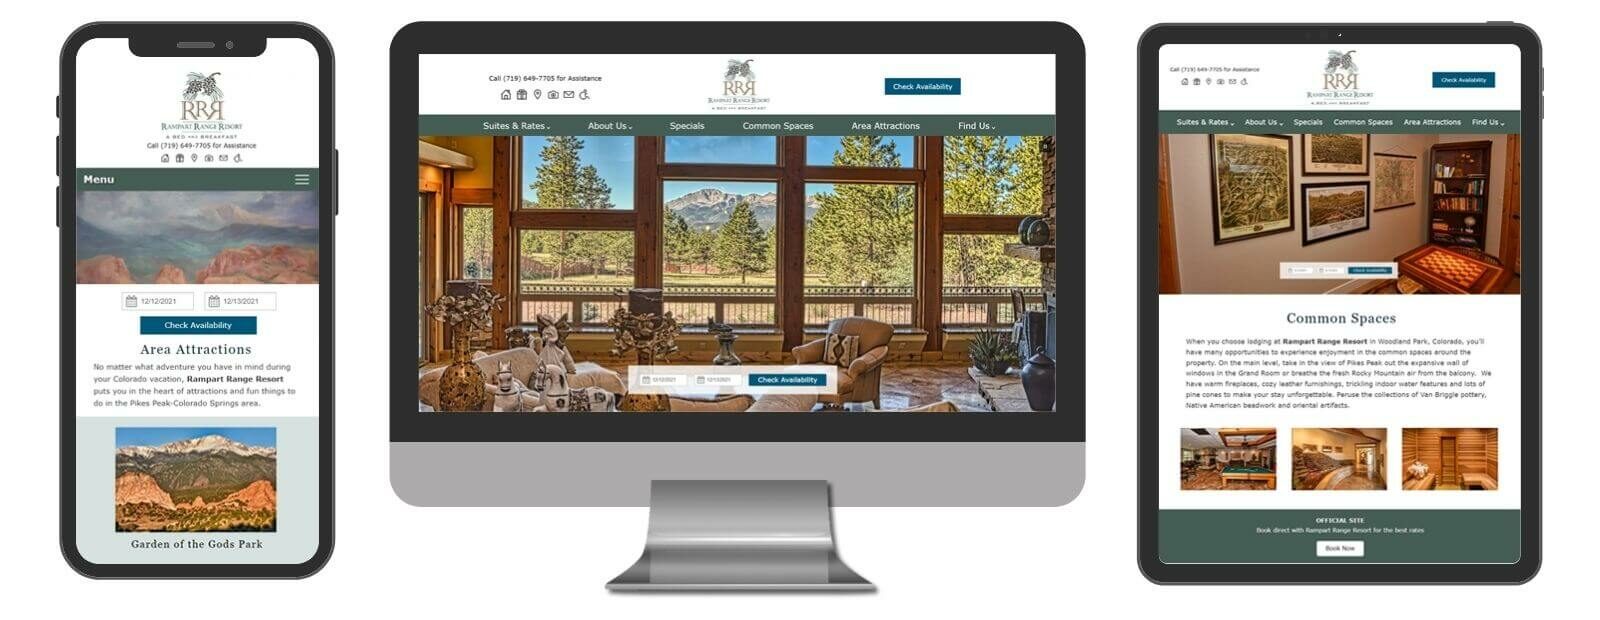 Rampart Range Resort website displayed in 3 sizes - mobile, template and desktop